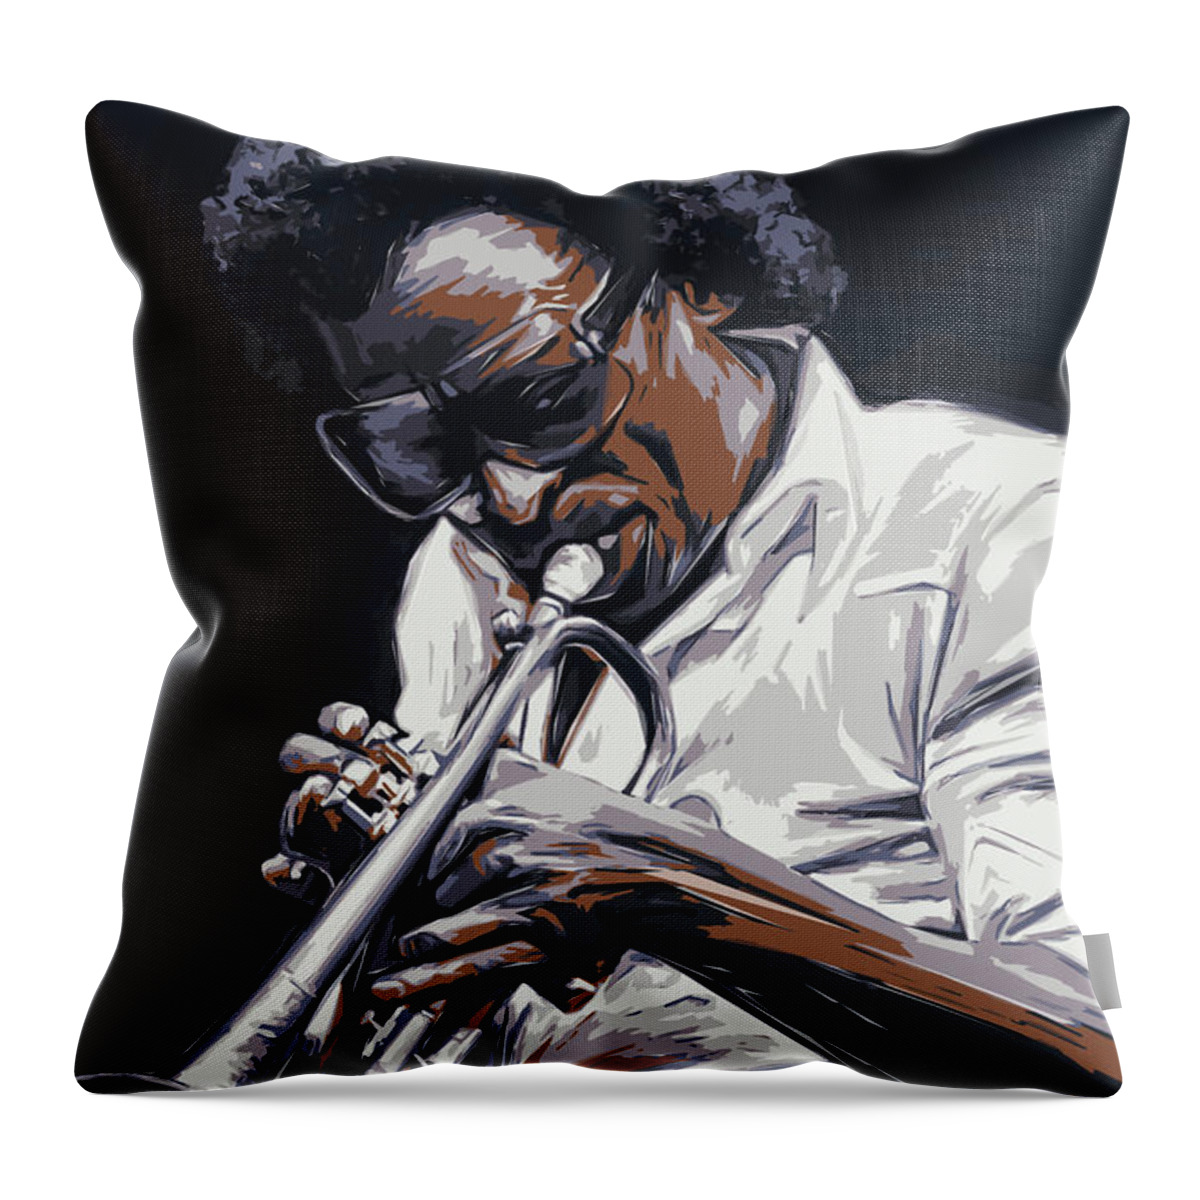 Trumpet Throw Pillow featuring the painting Davis by Andrzej Szczerski